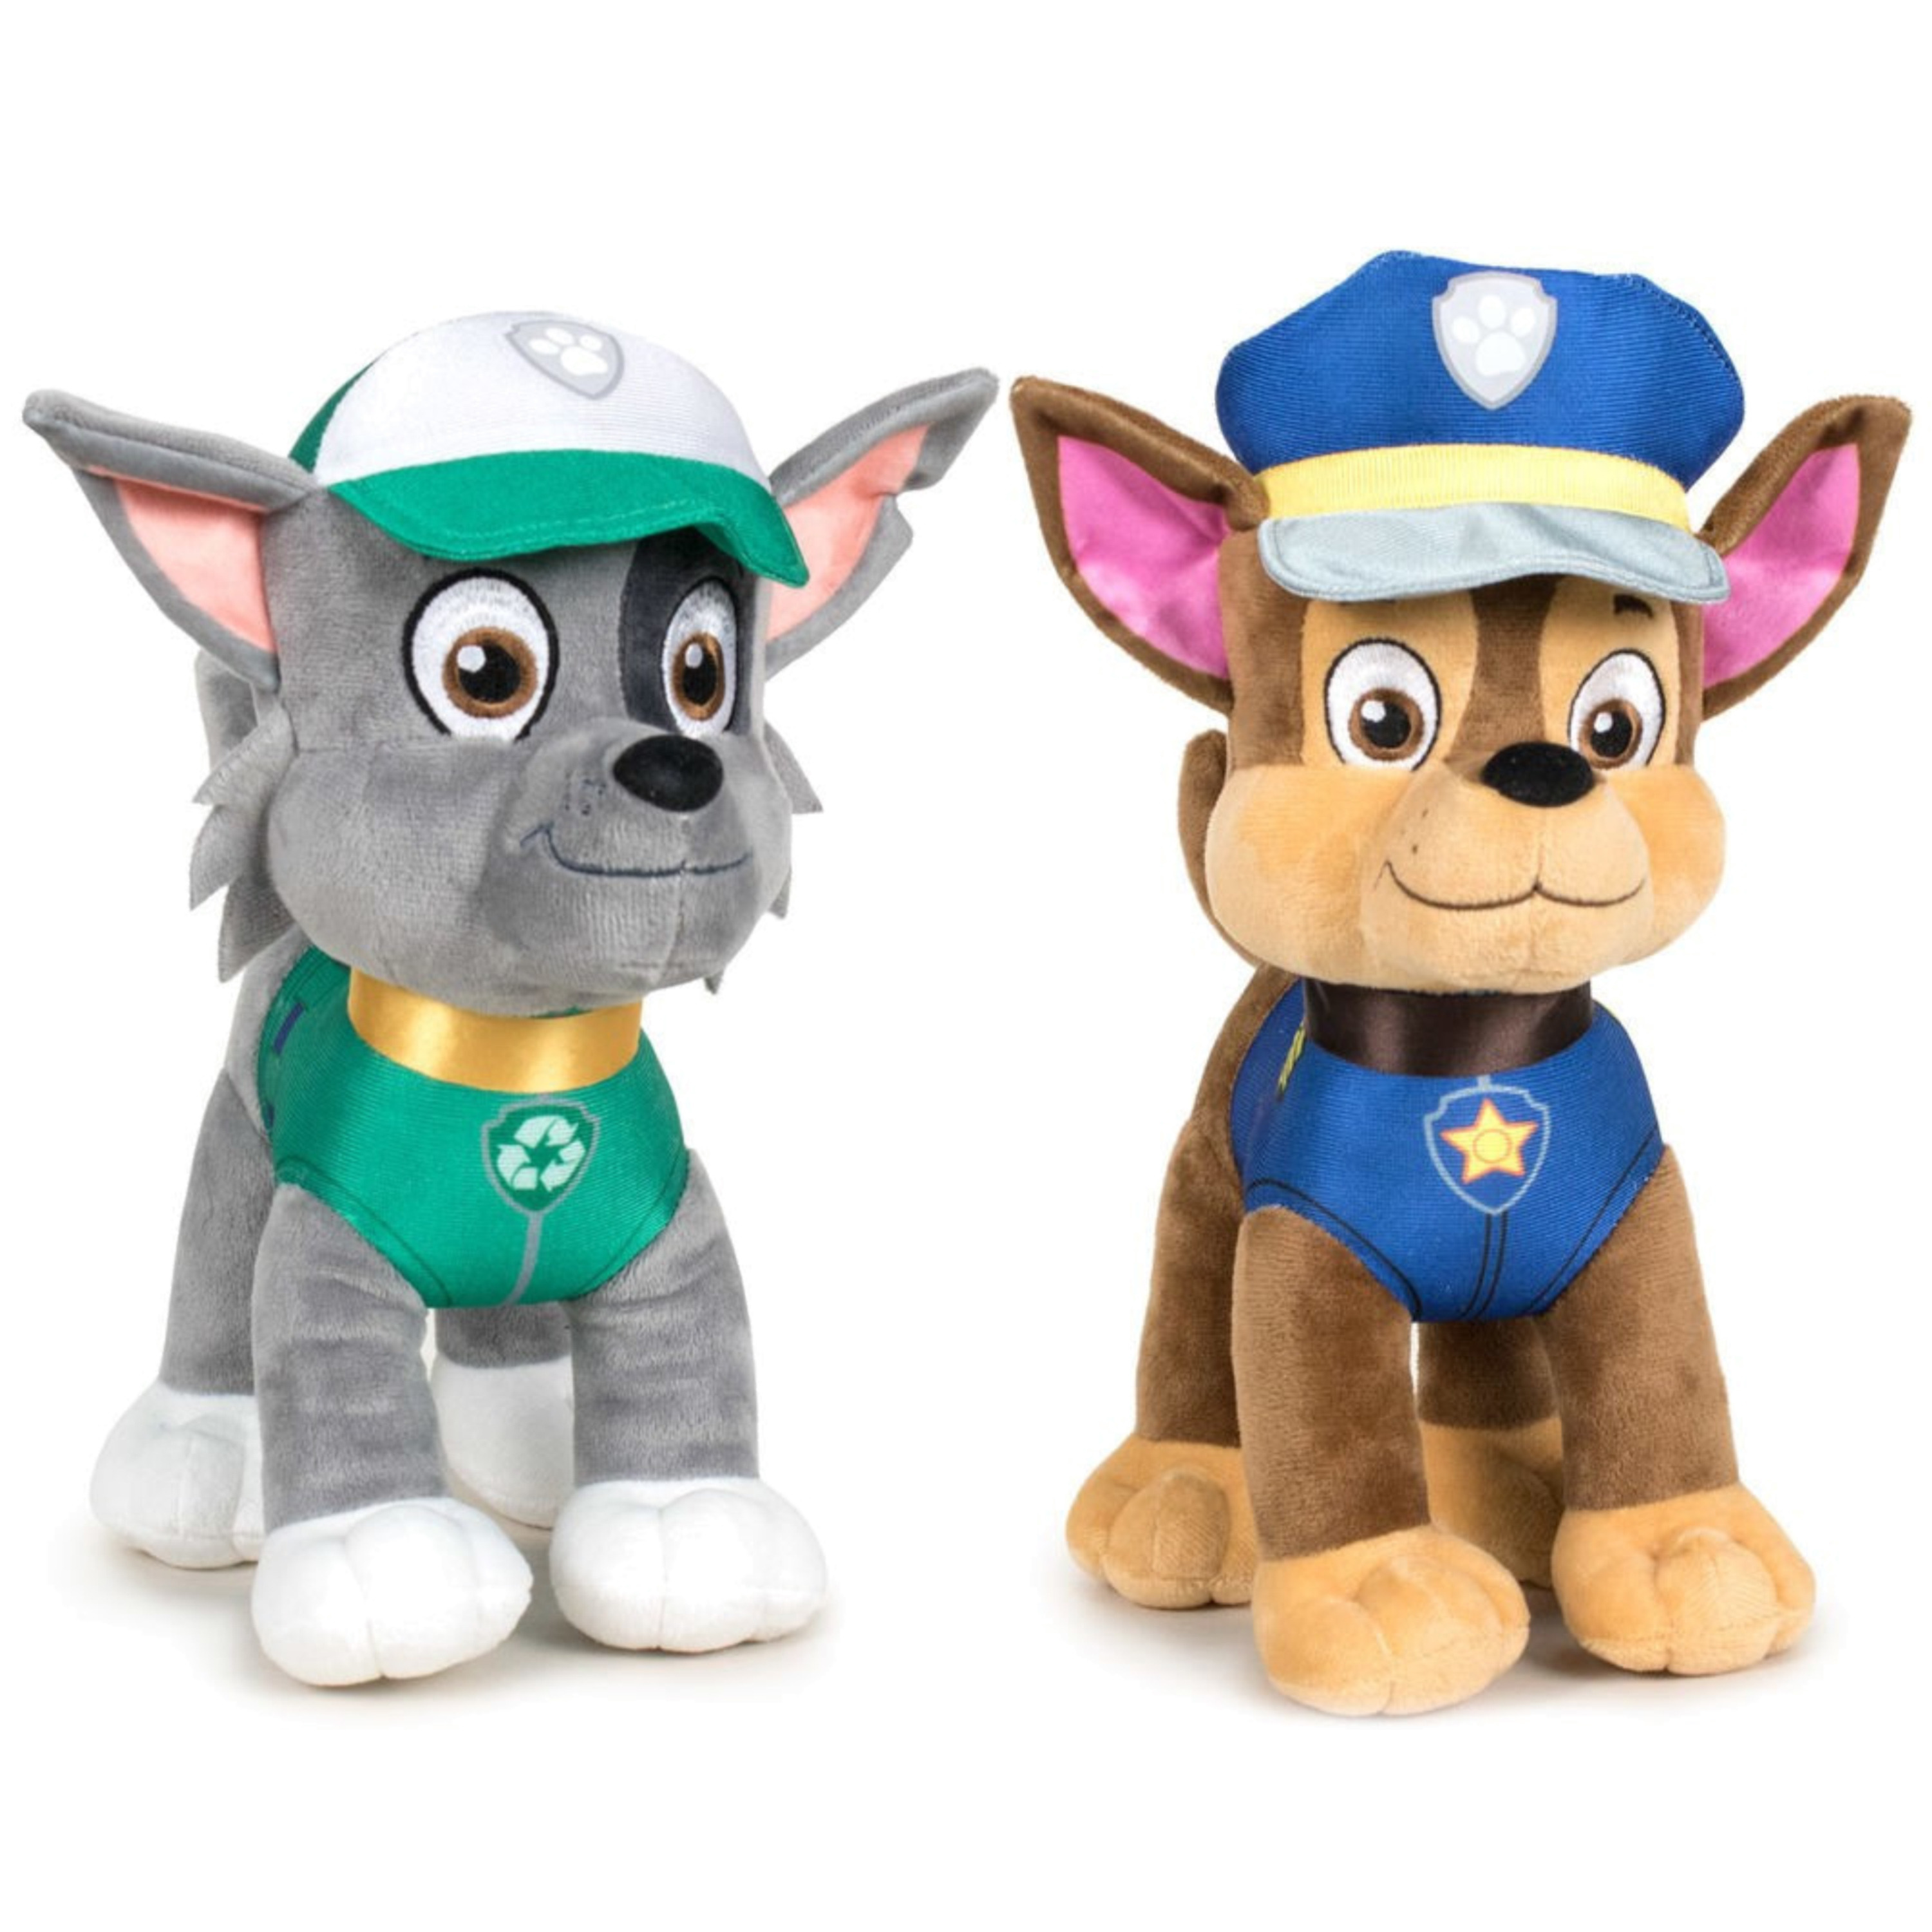 Paw Patrol figuren speelgoed knuffels set van 2x karakters Rocky en Chase 19 cm -